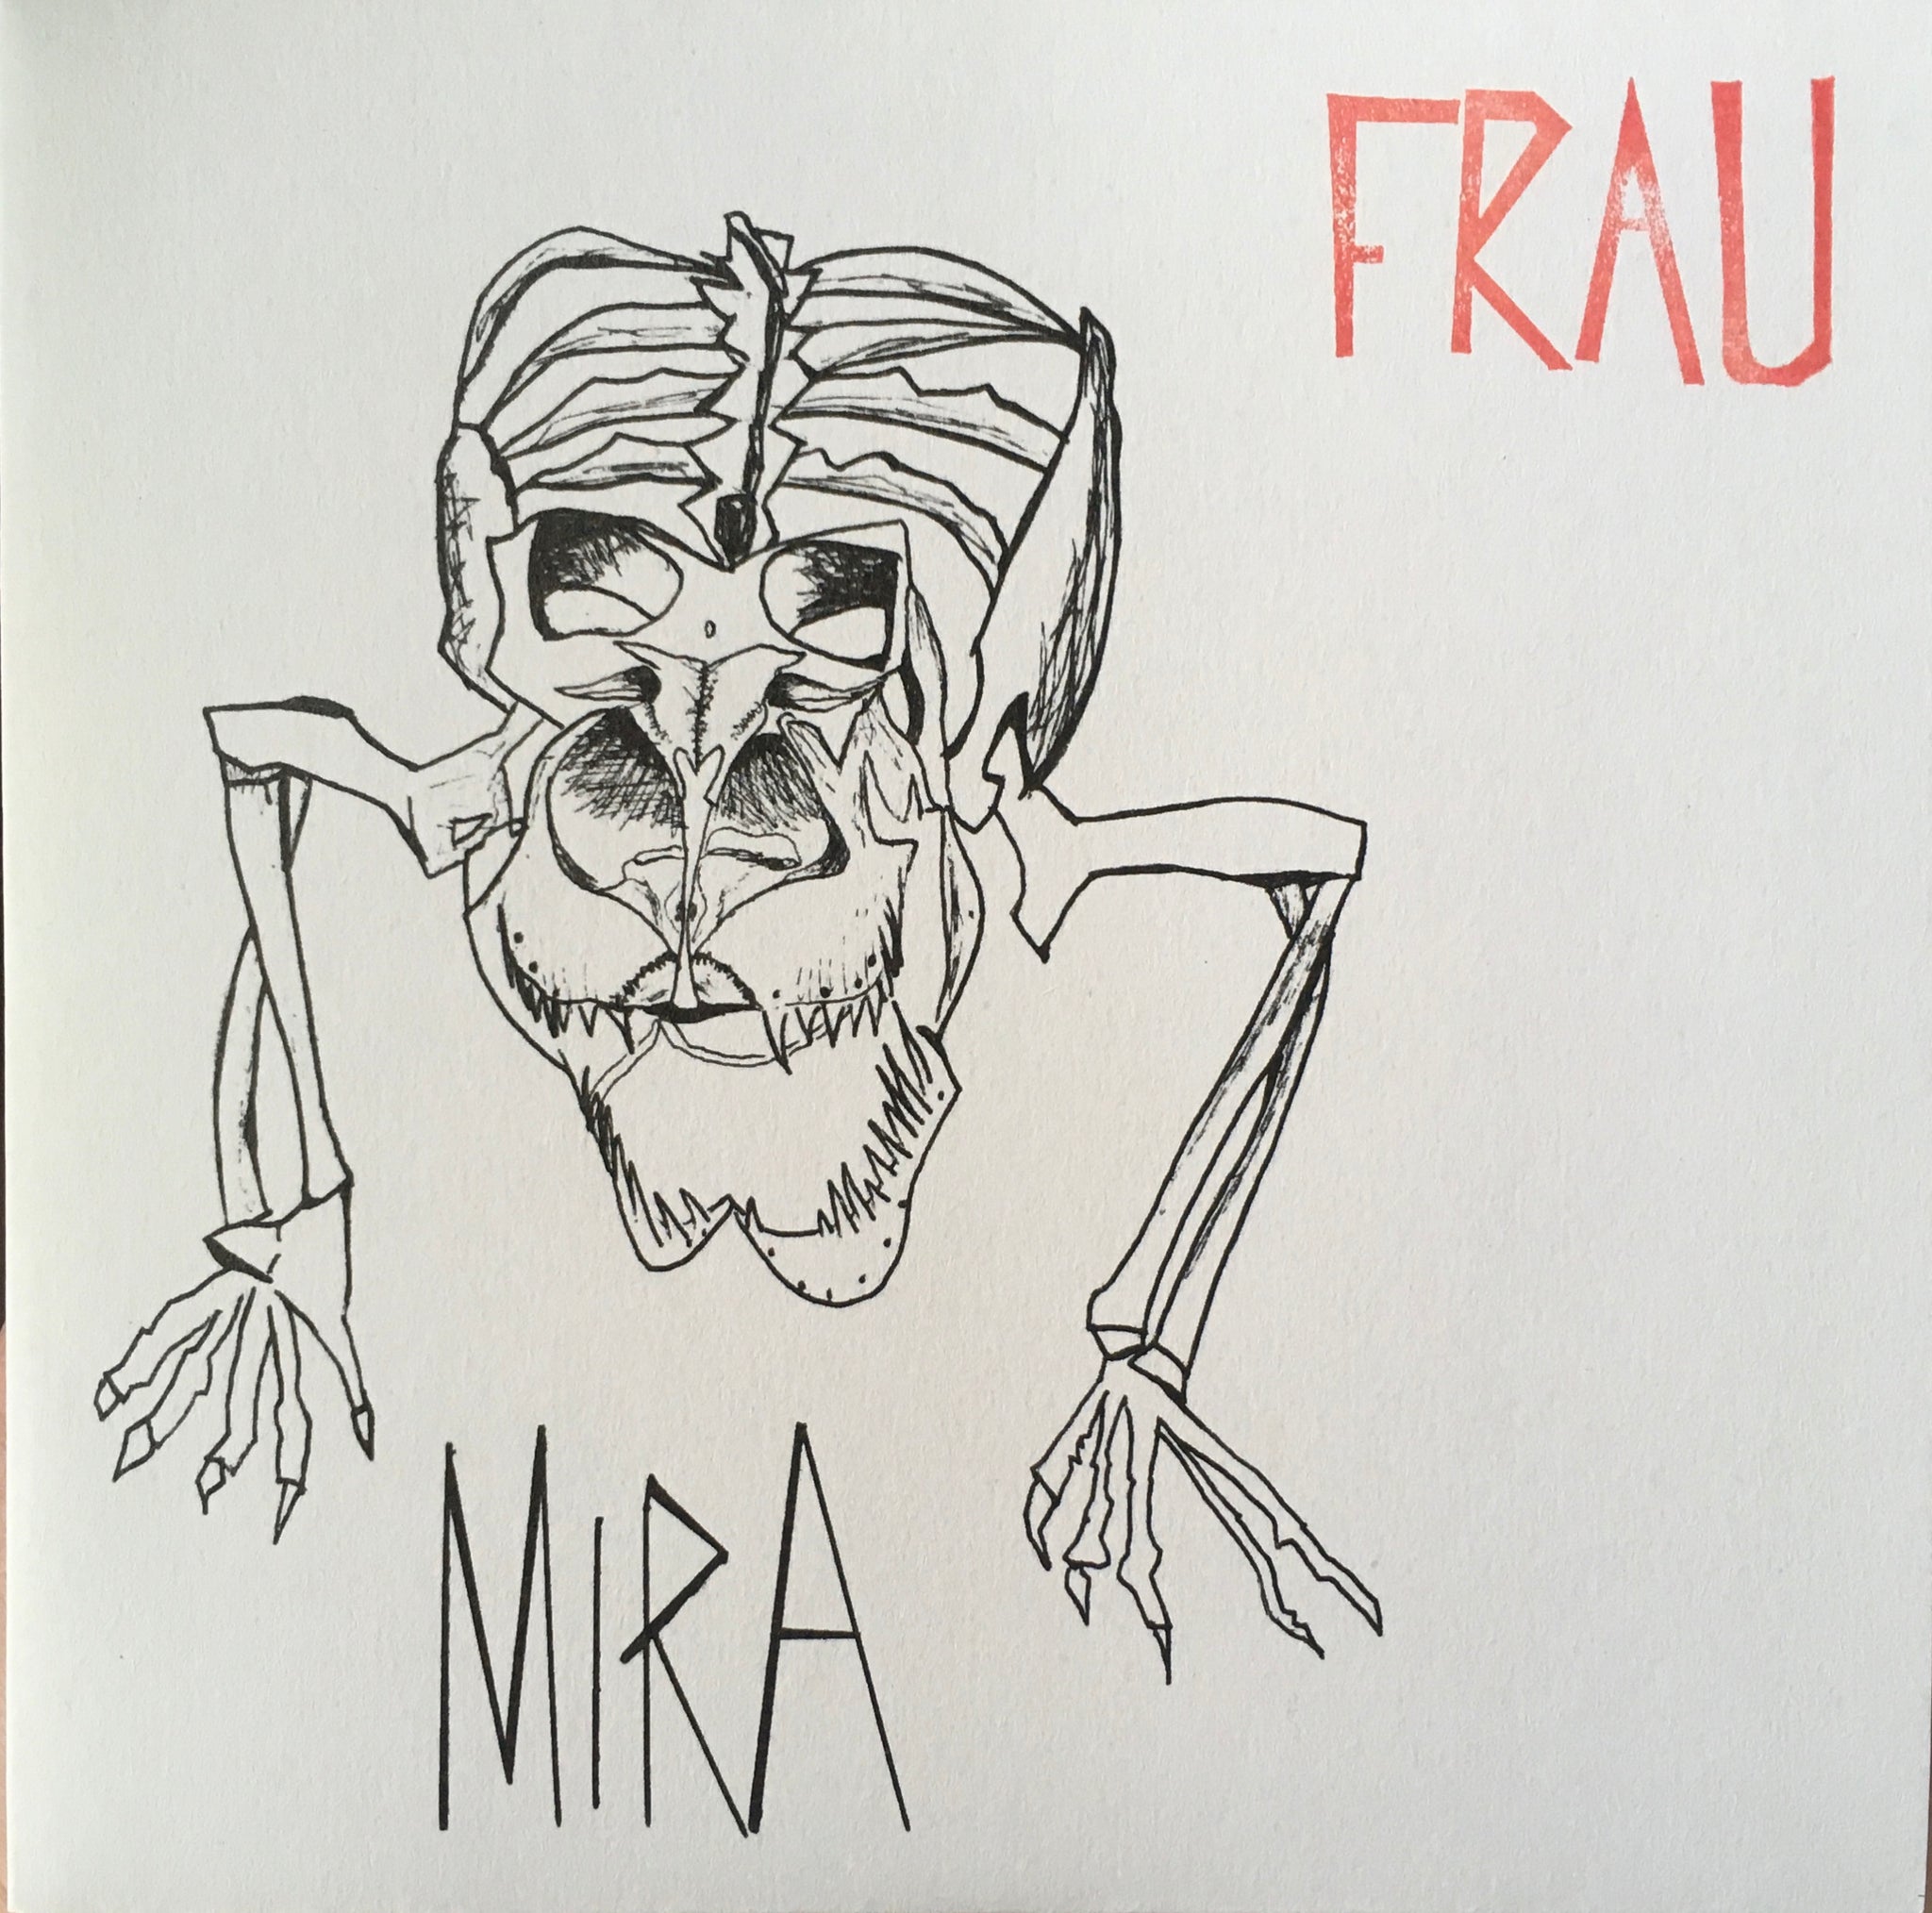 Frau "Mira" Single (2015)